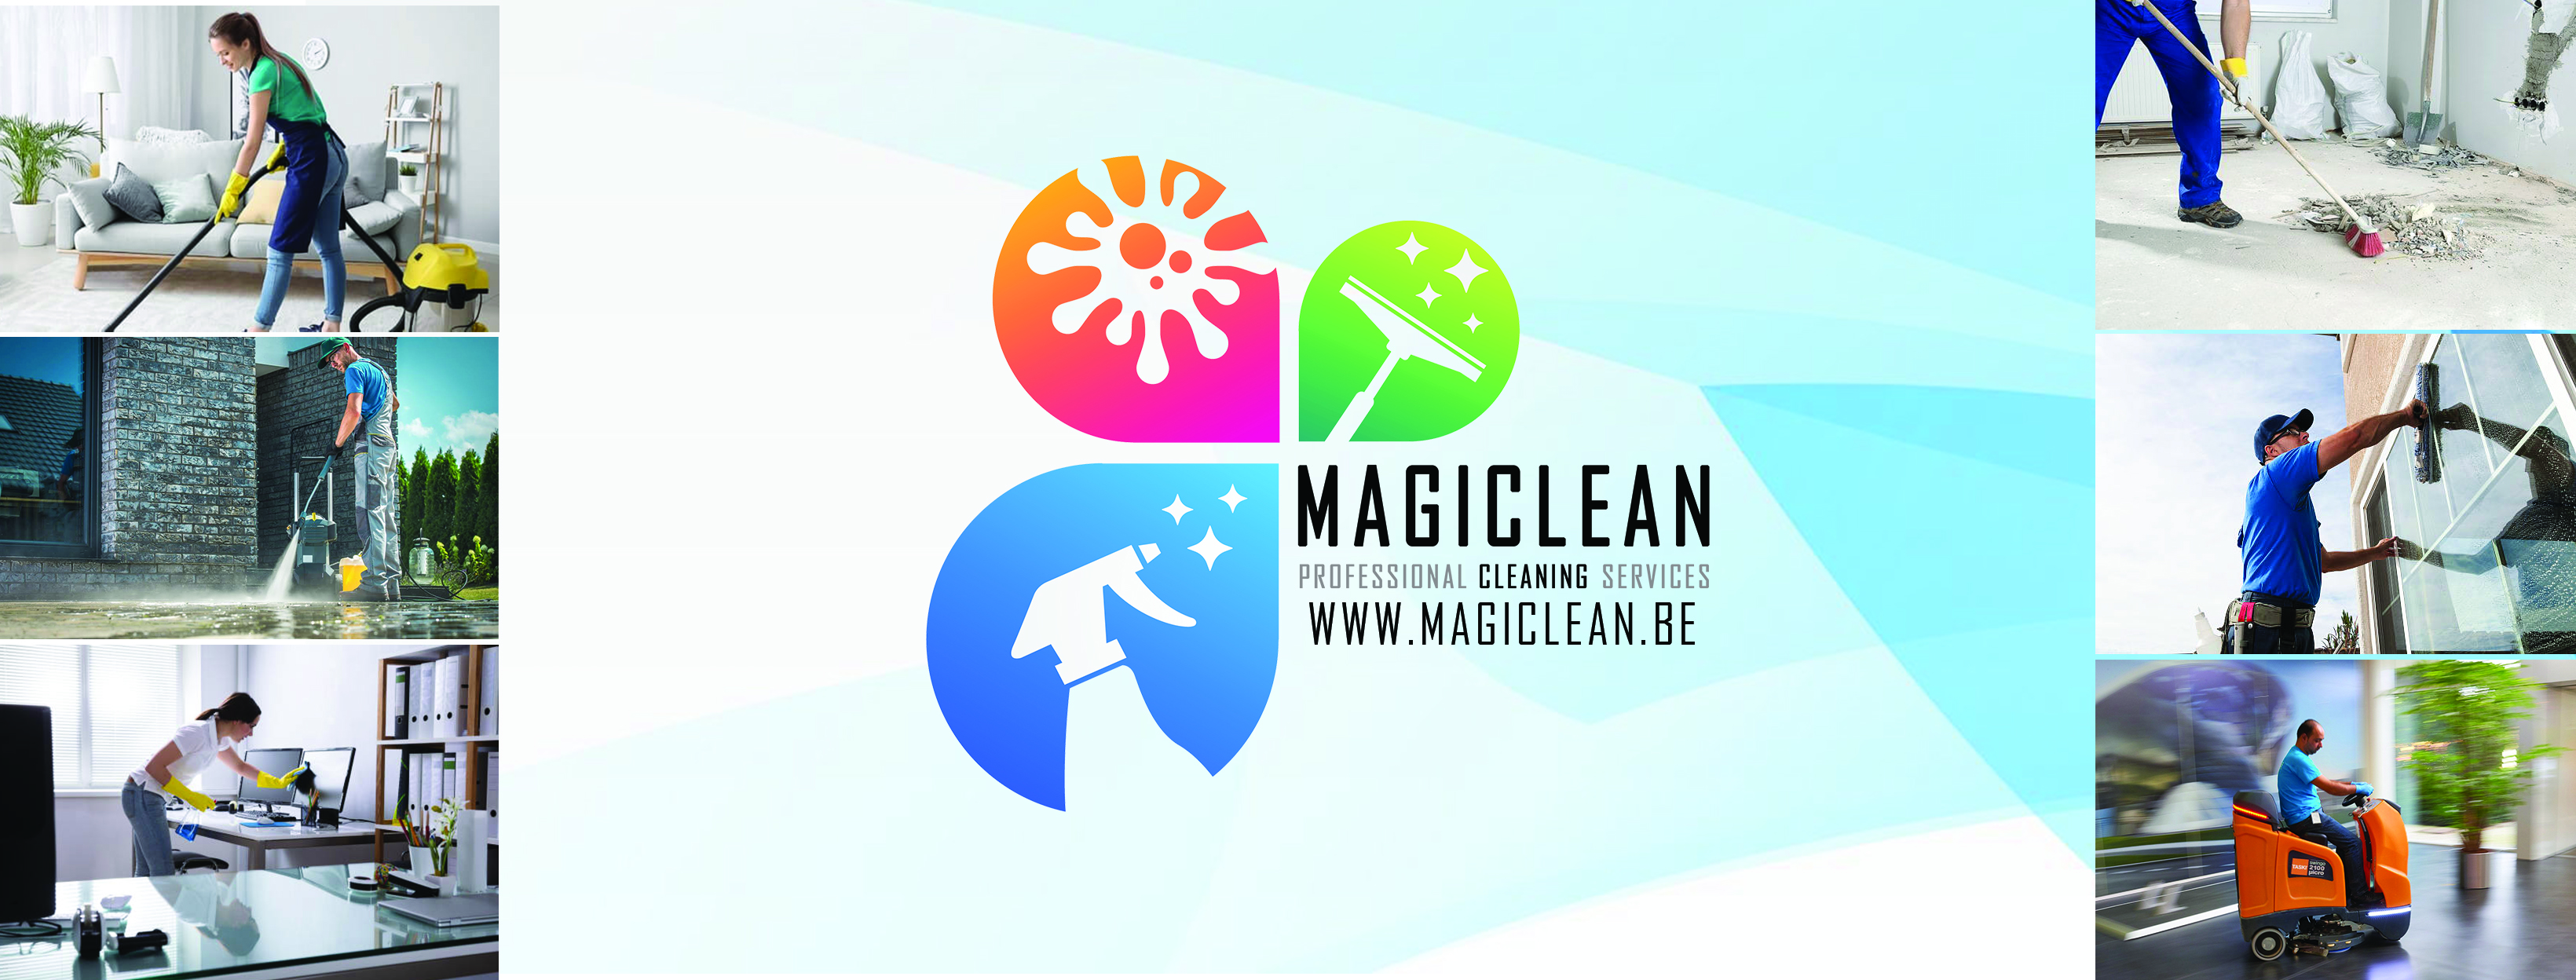 schoonmaakbedrijven Lier Magiclean - Professional Cleaning Services